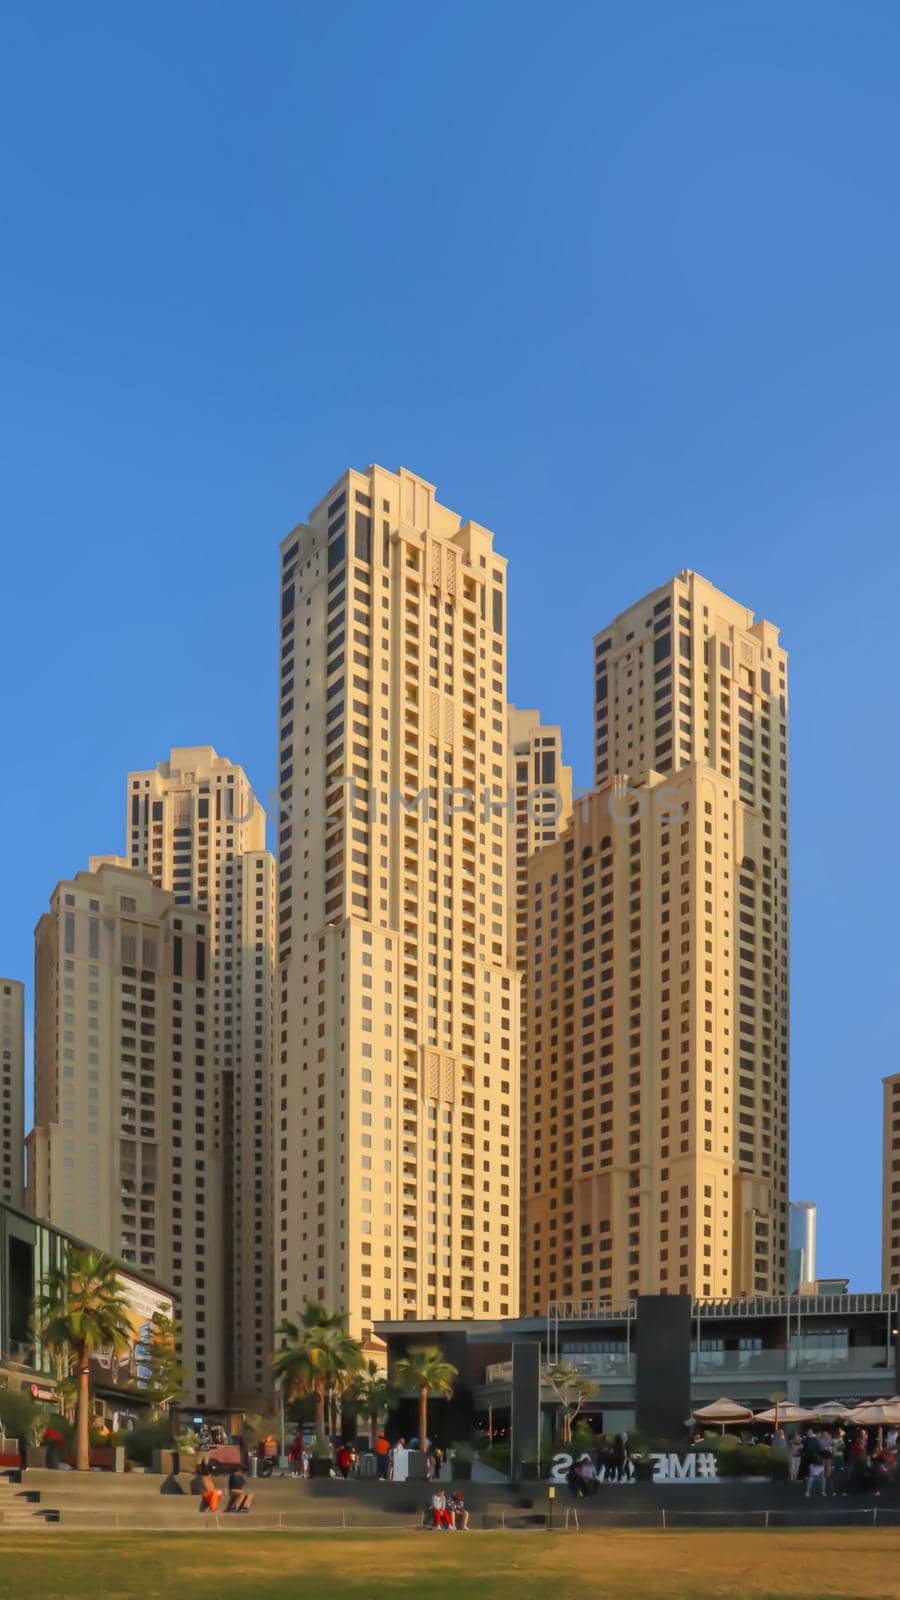 Dubai hotels at summer day.